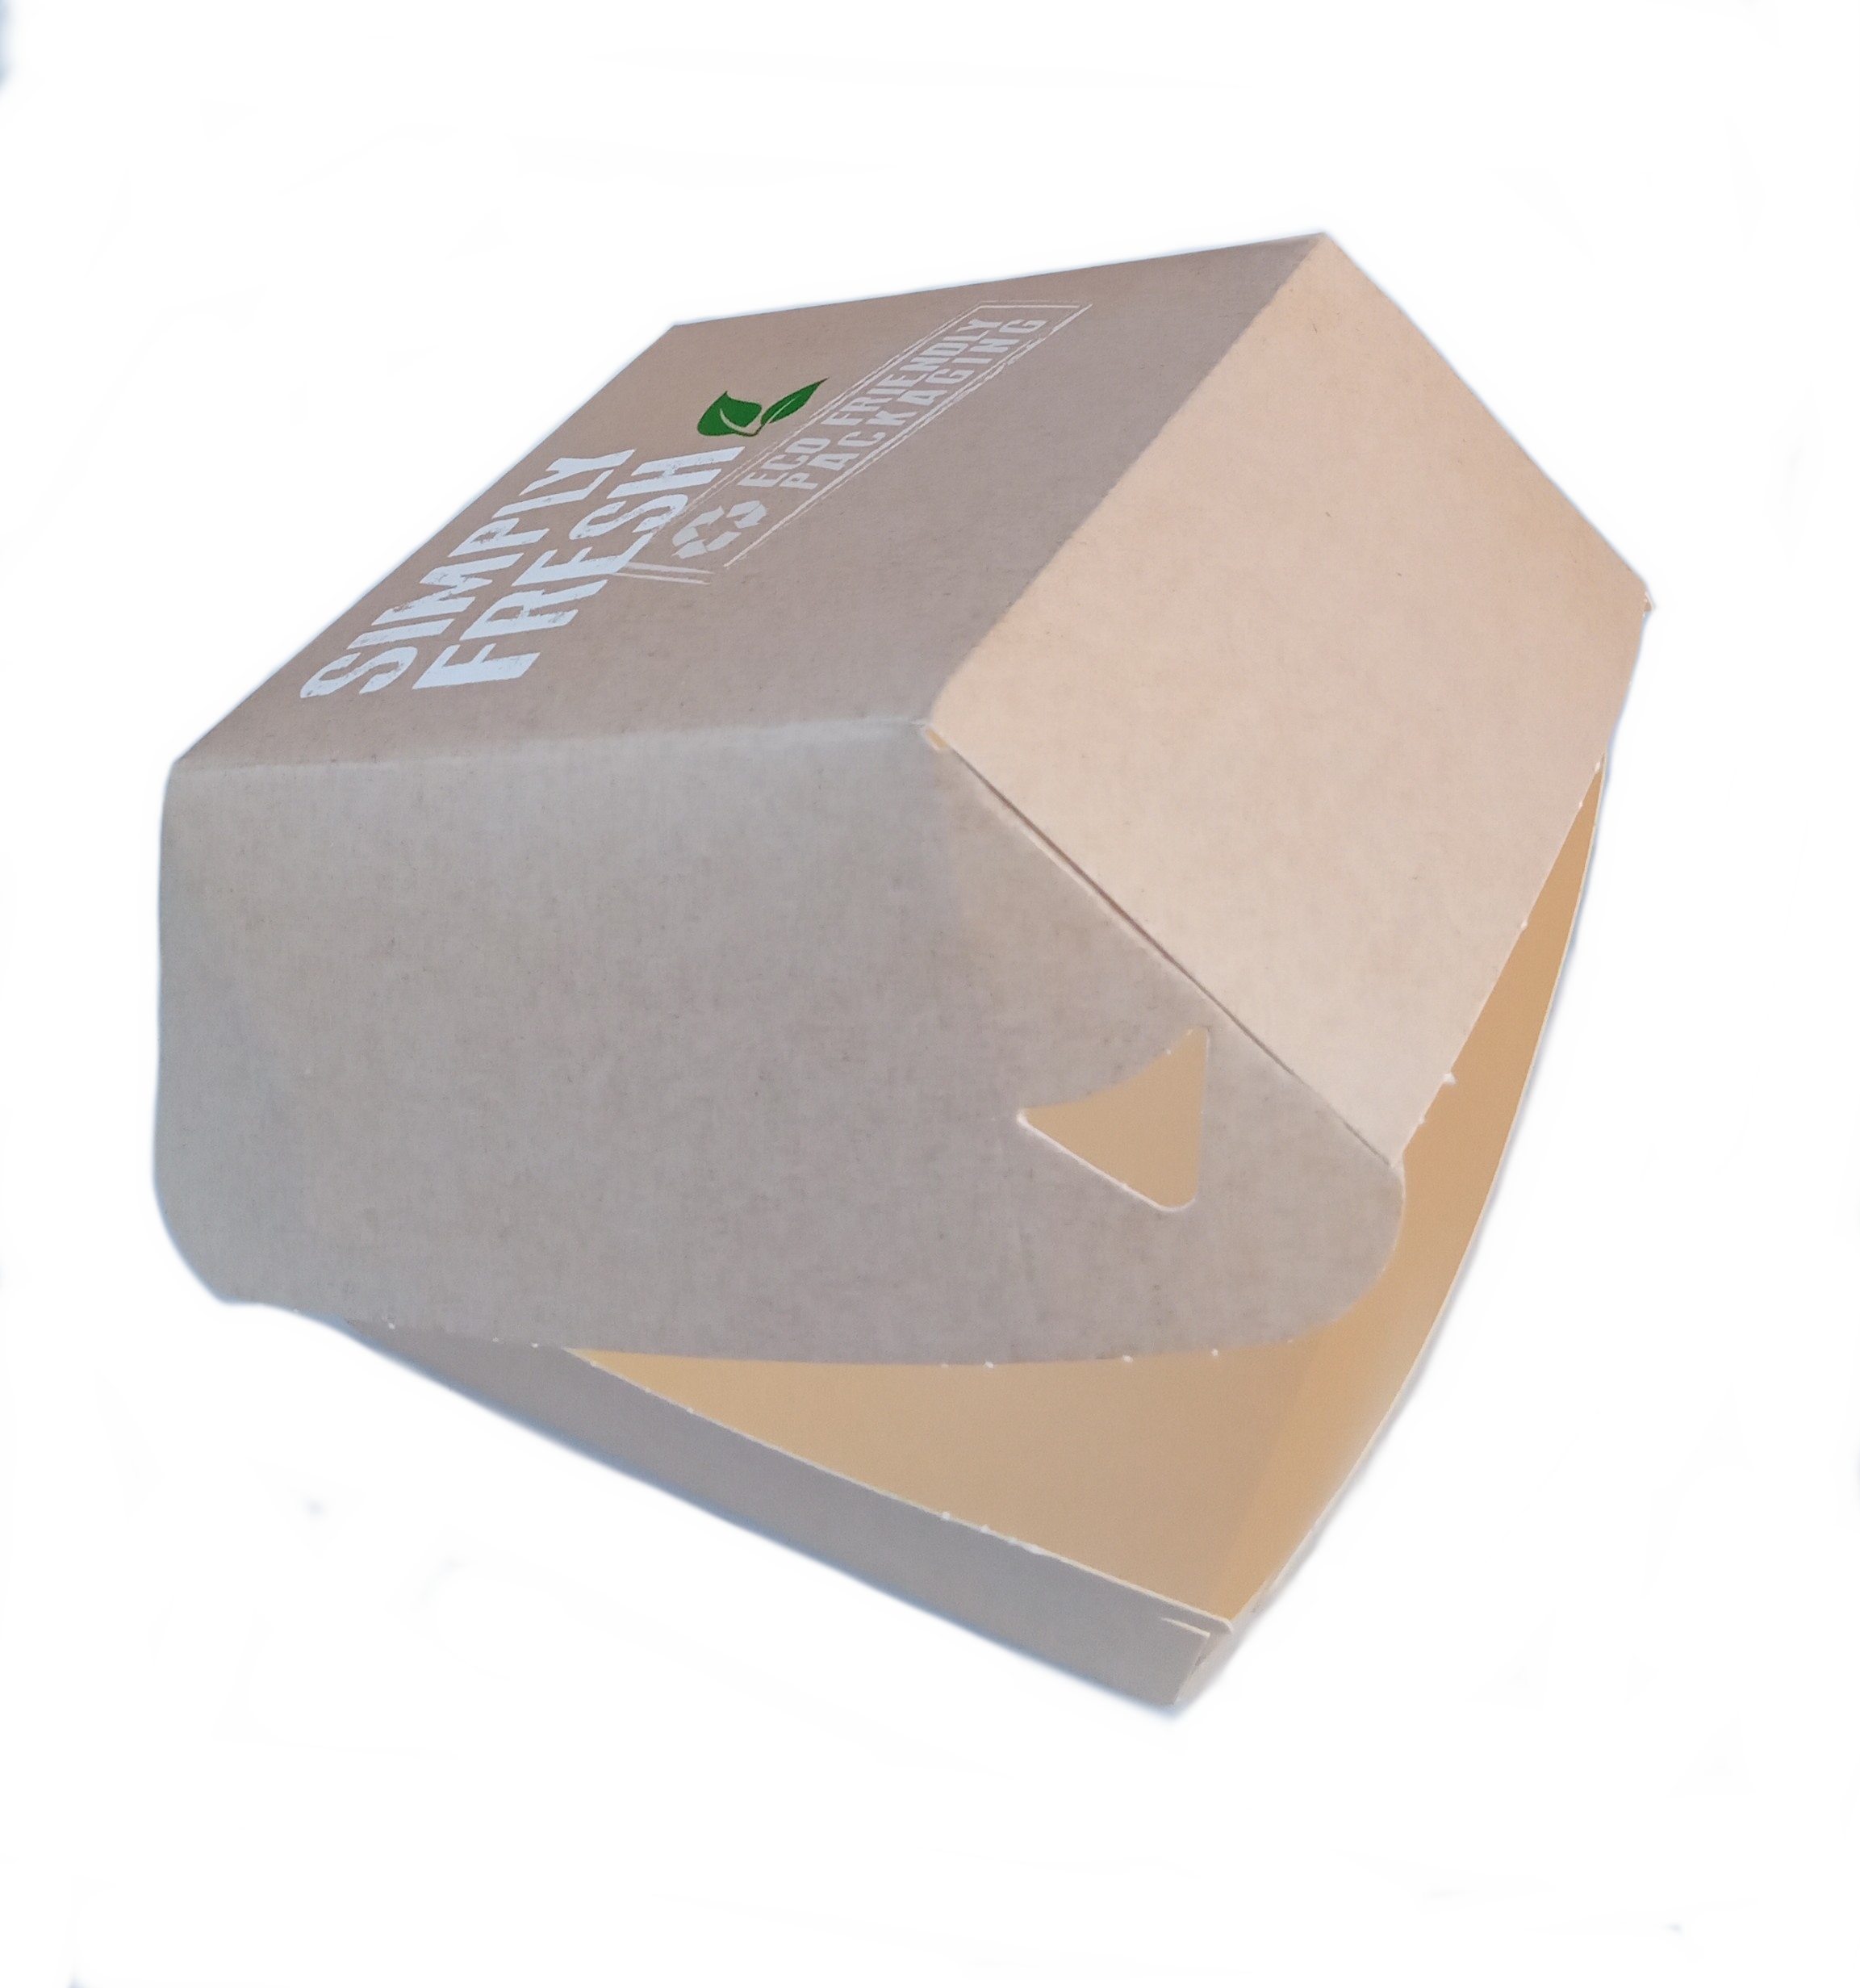 Simply Fresh Burger Box  Hamburger Box biologisch abbaubar kompostierbar 